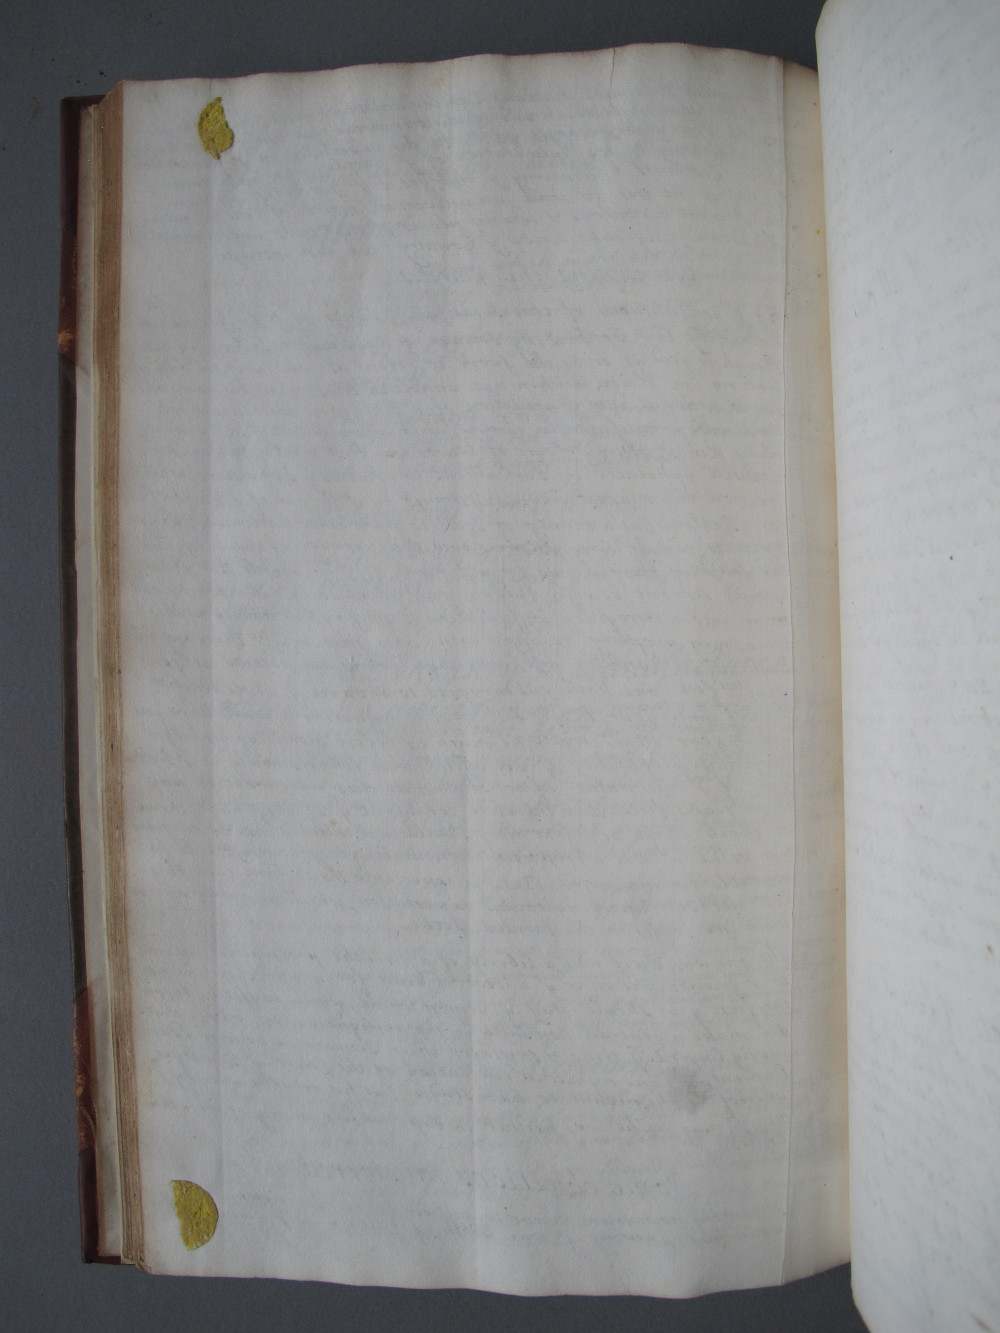 Folio 60 verso